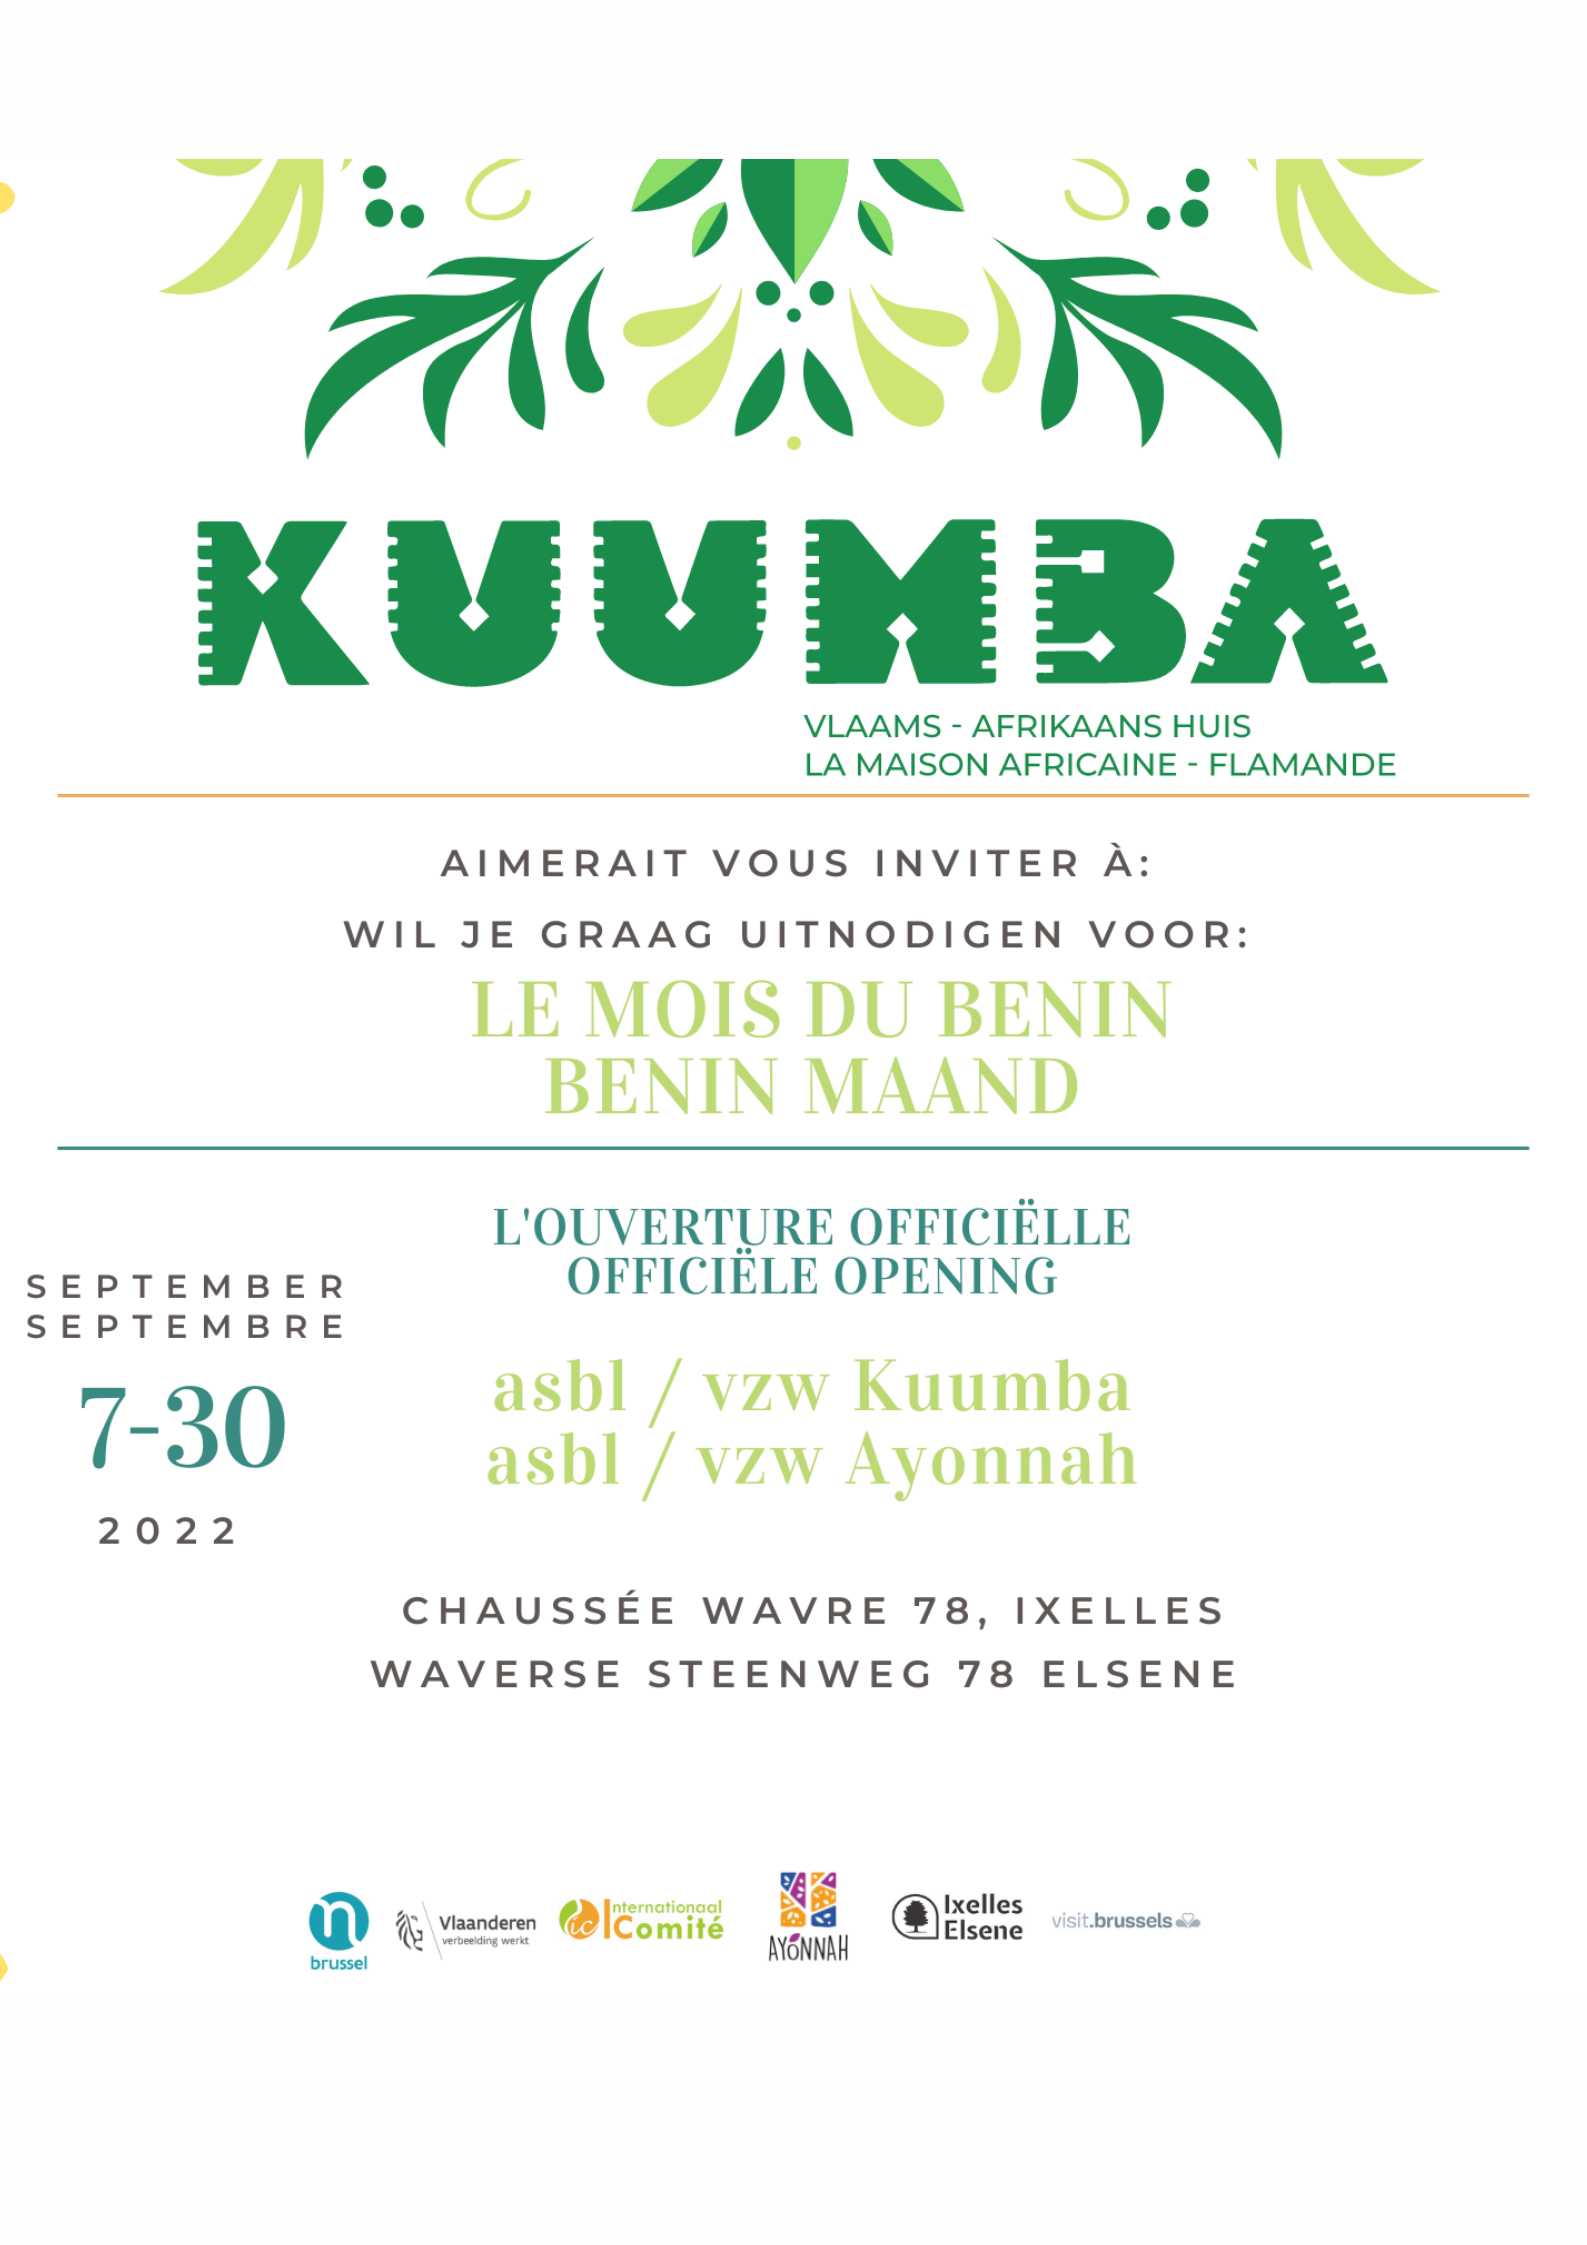 Le Benin s'invite a Kuumba